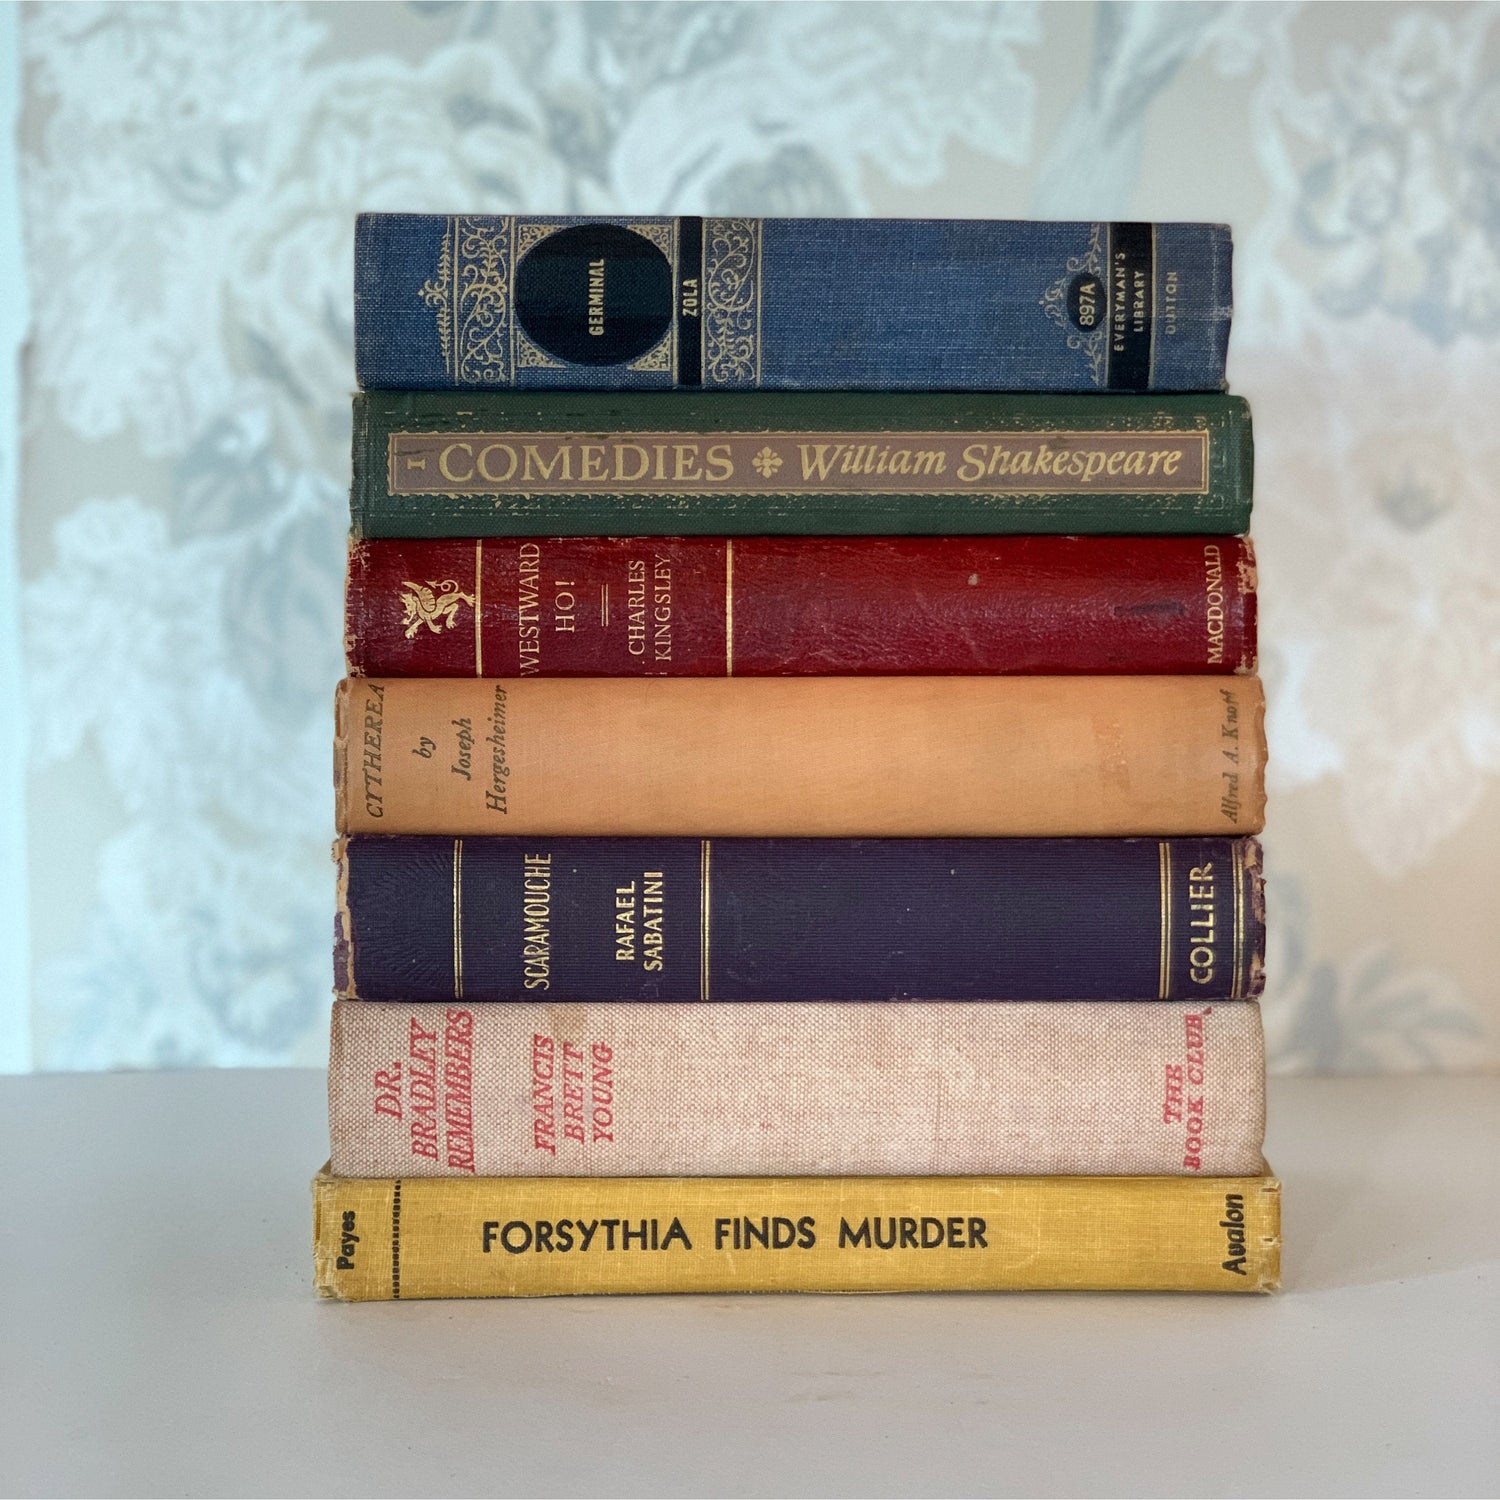 Faded Vintage Rainbow Book Set for Shelf Display, Rustic Farmhouse Decor, Rainbow Bookshelf Decor